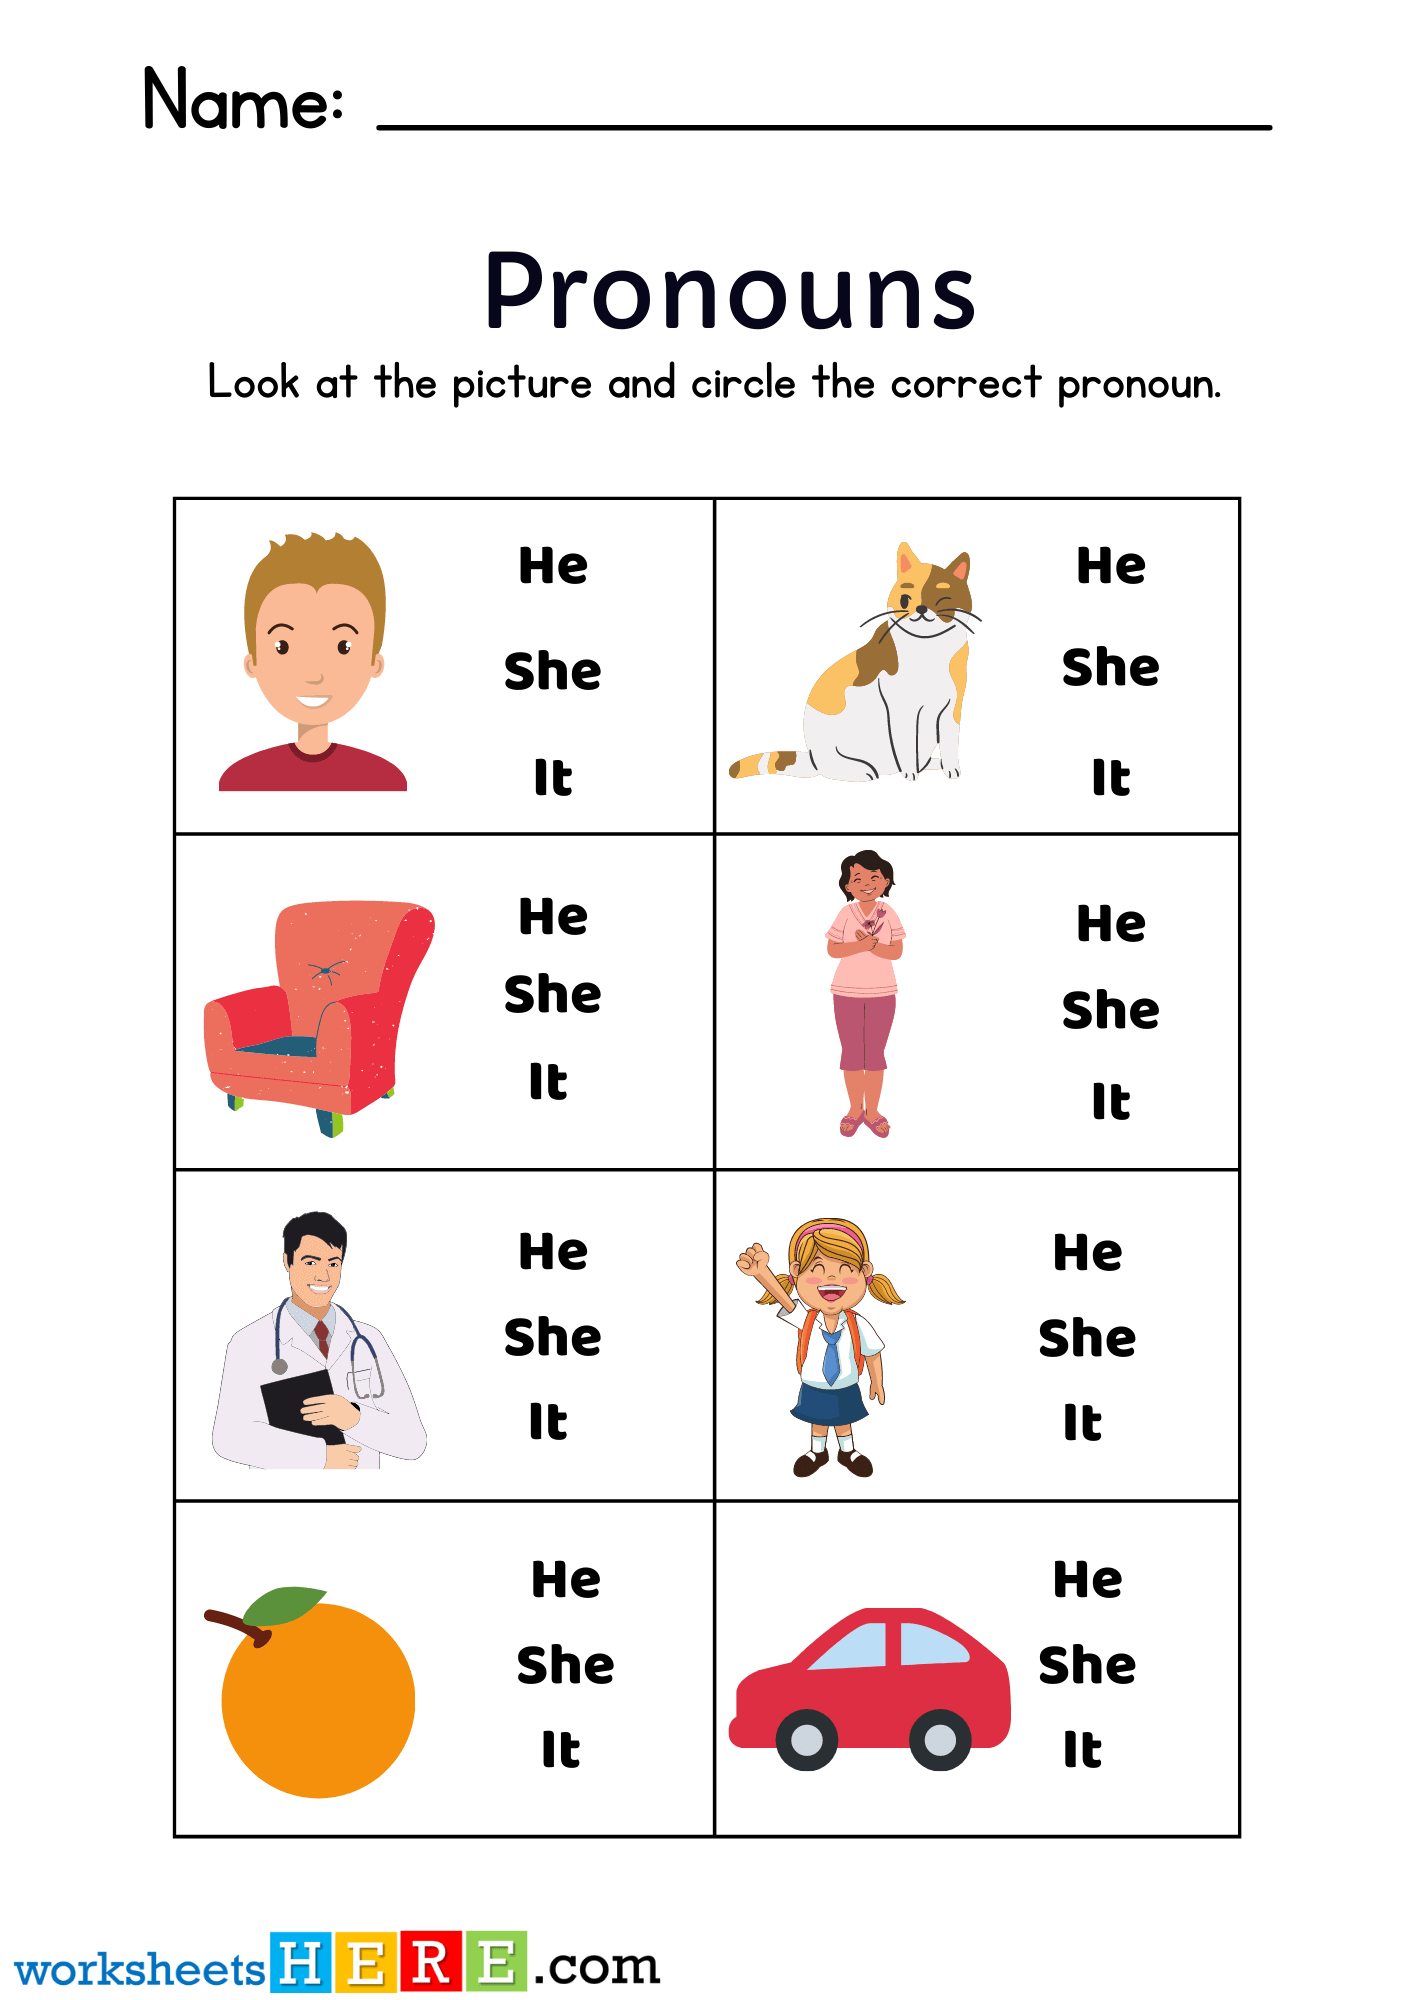 Pronouns Worksheets, Find Correct Personal Pronouns He She It Pdf